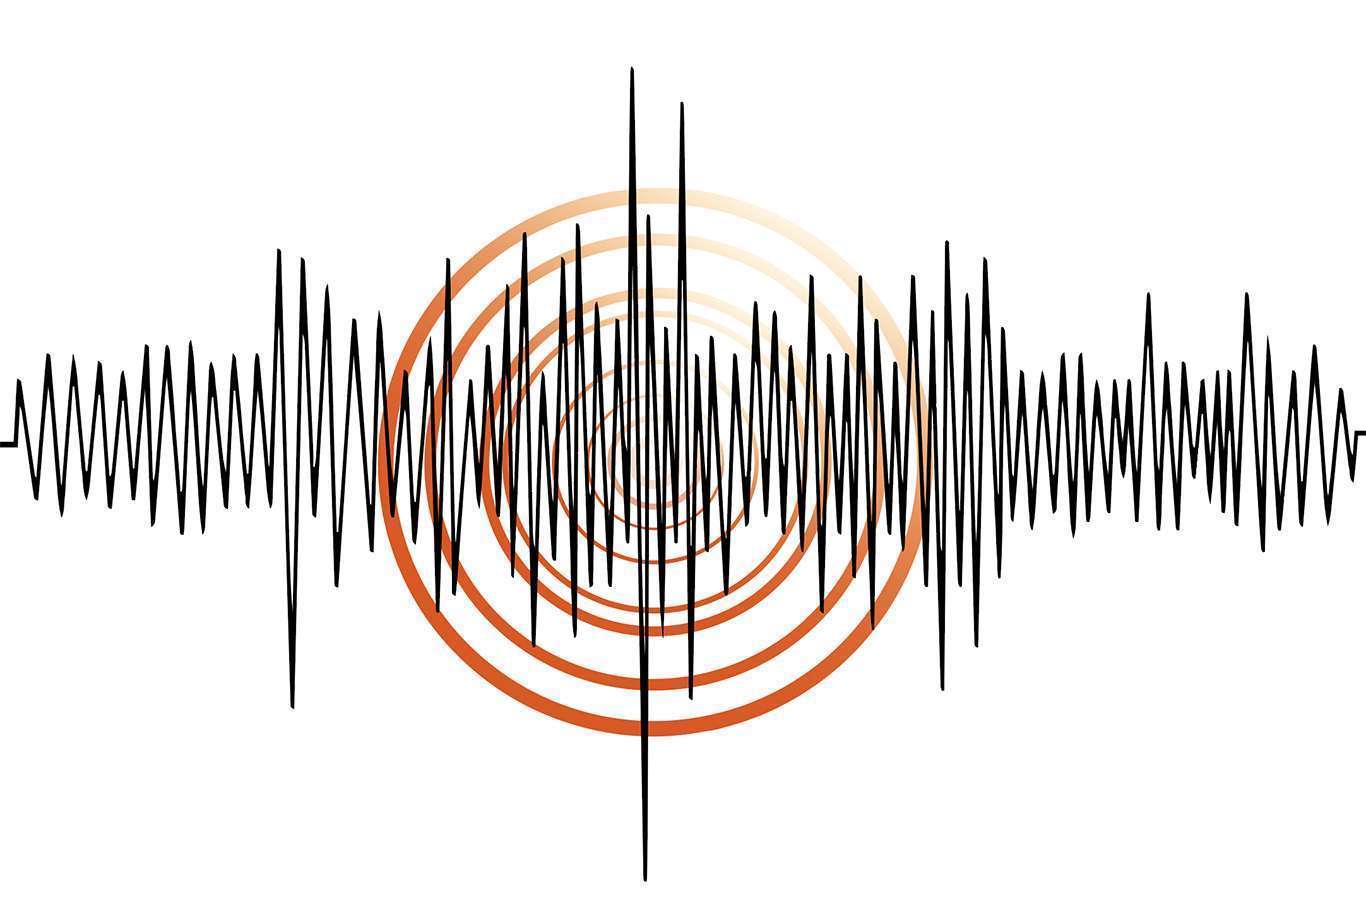 A magnitude 5.9 earthquake rocks northwestern Iran